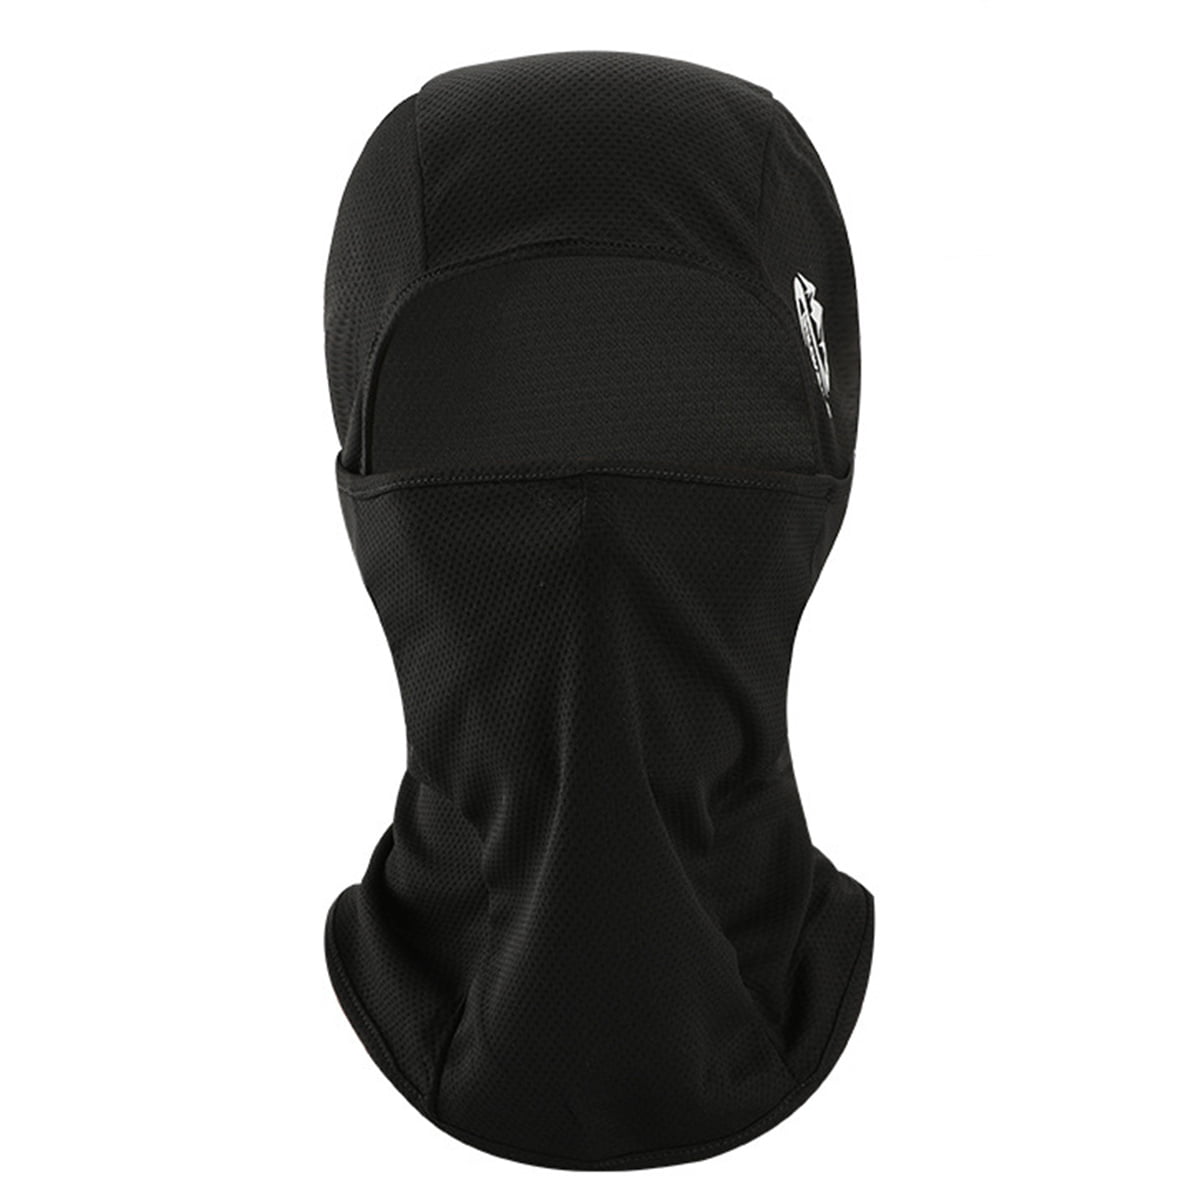 Balaclava Face Mask UV Protection Ski Sun Hood Tactical Mask for Men Women Black 